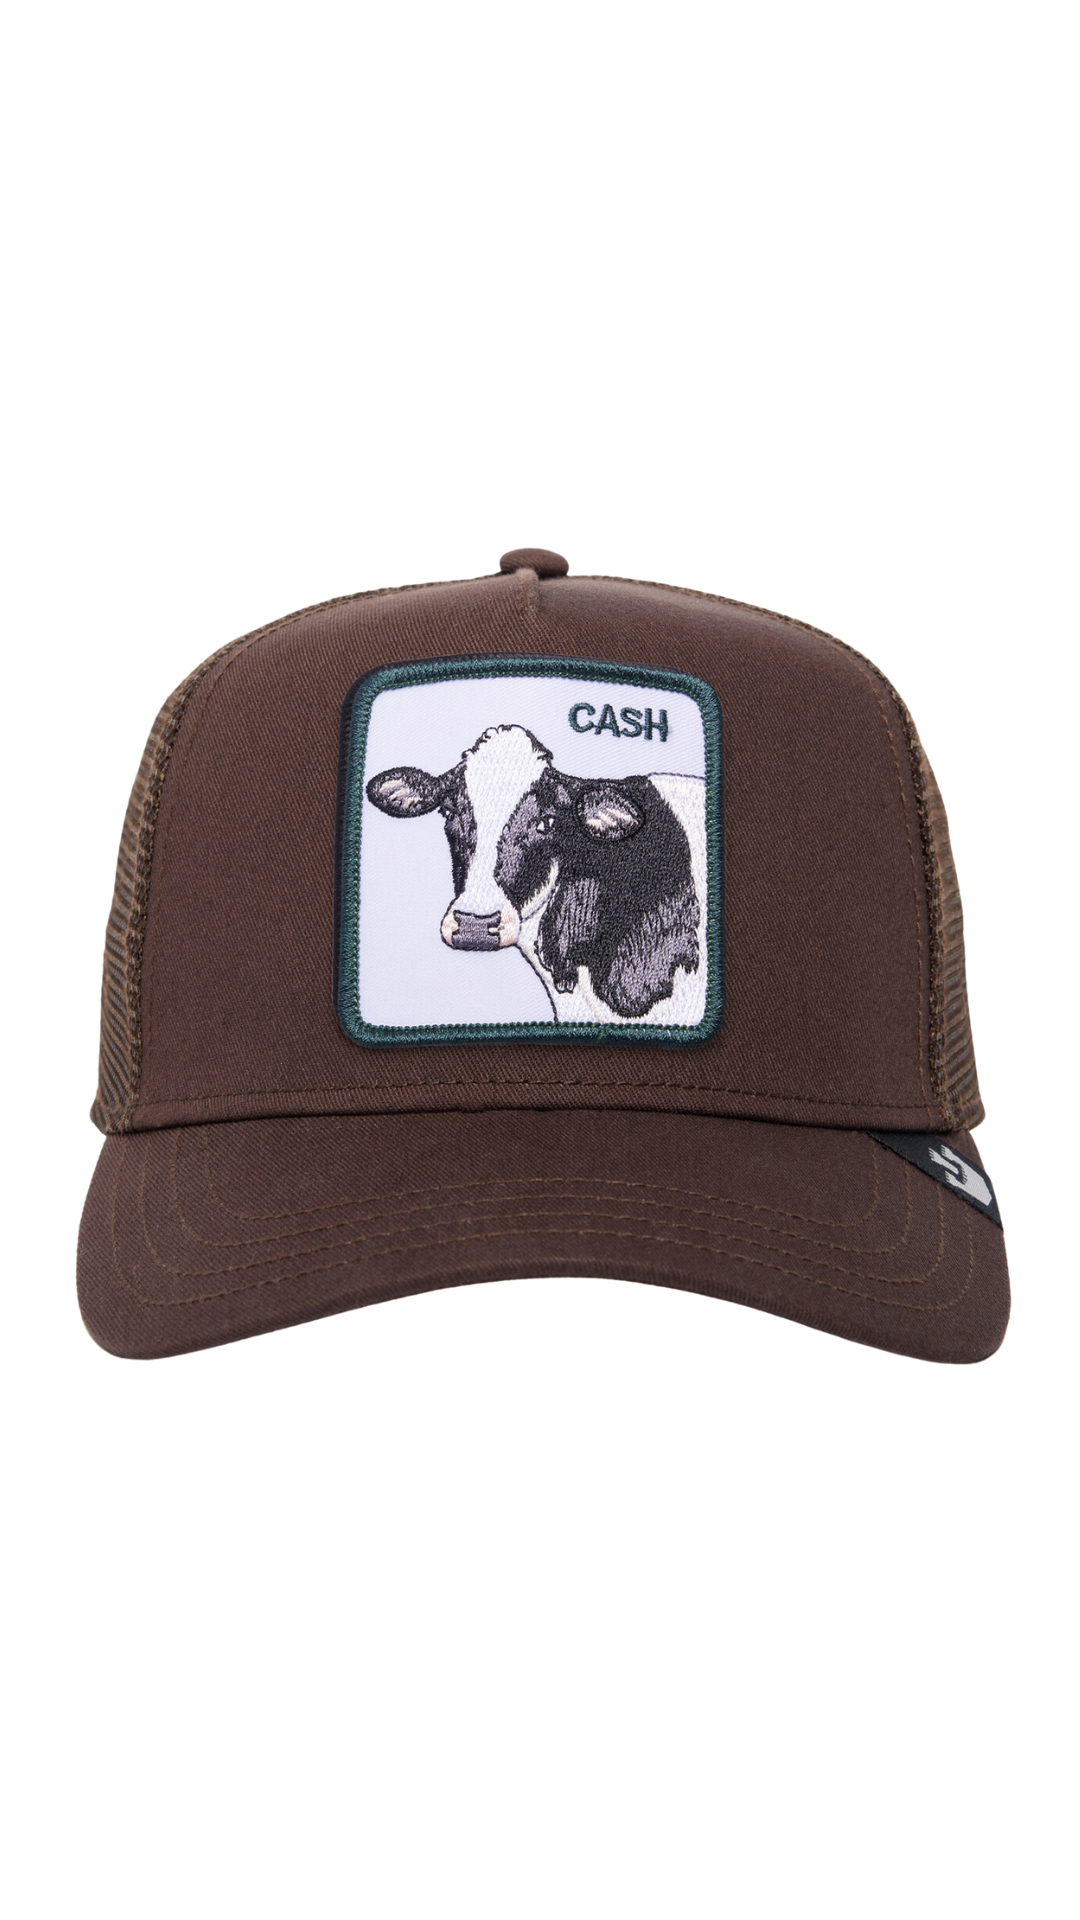 BRO The Cash Cow Hat